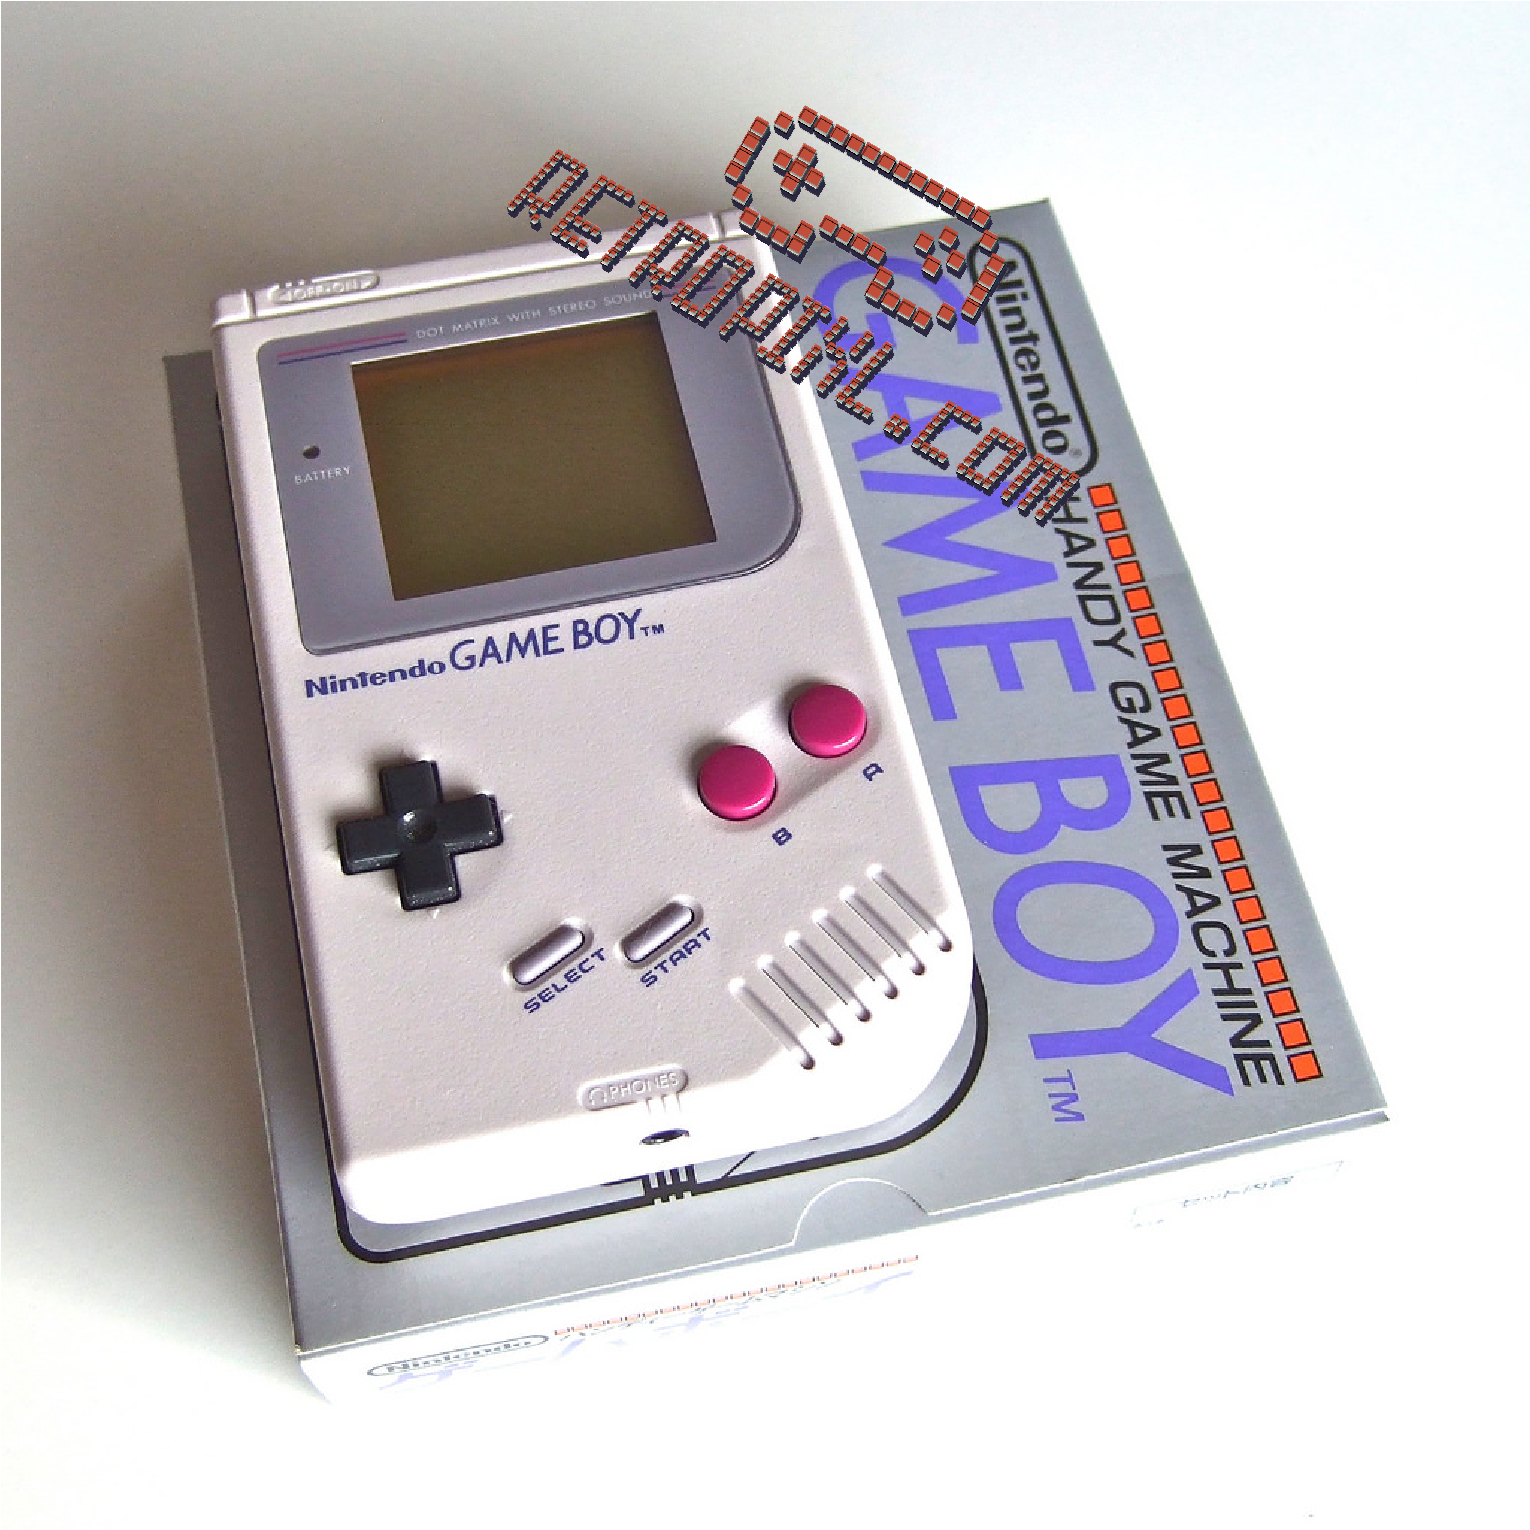 Les Game Boy collectors